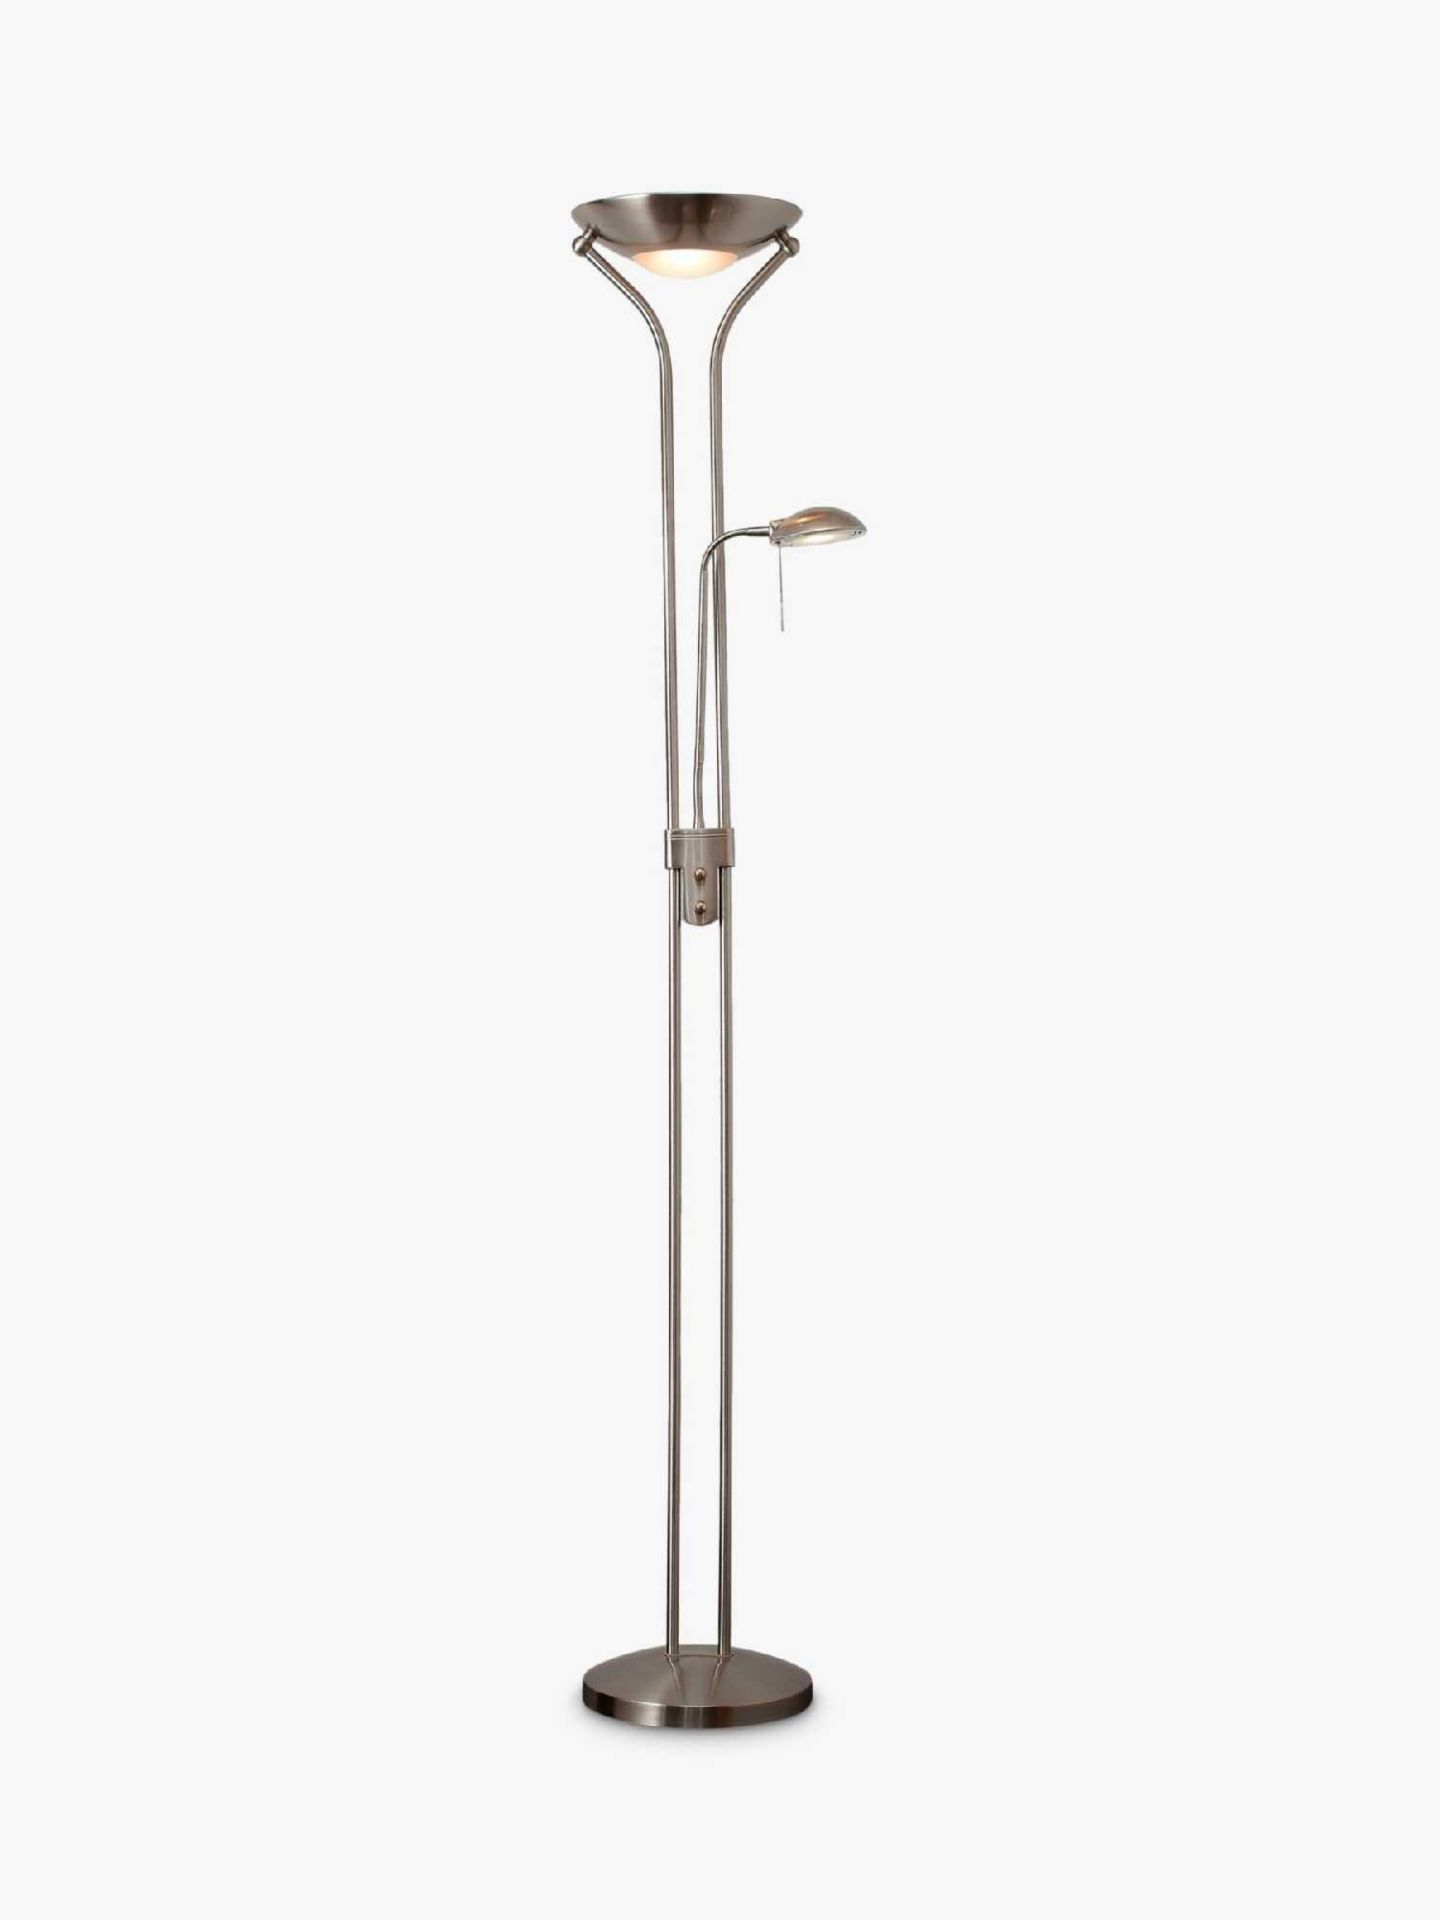 Rrb £85 Boxed John Lewis And Partners Zella Designer Floor Standing Lamp